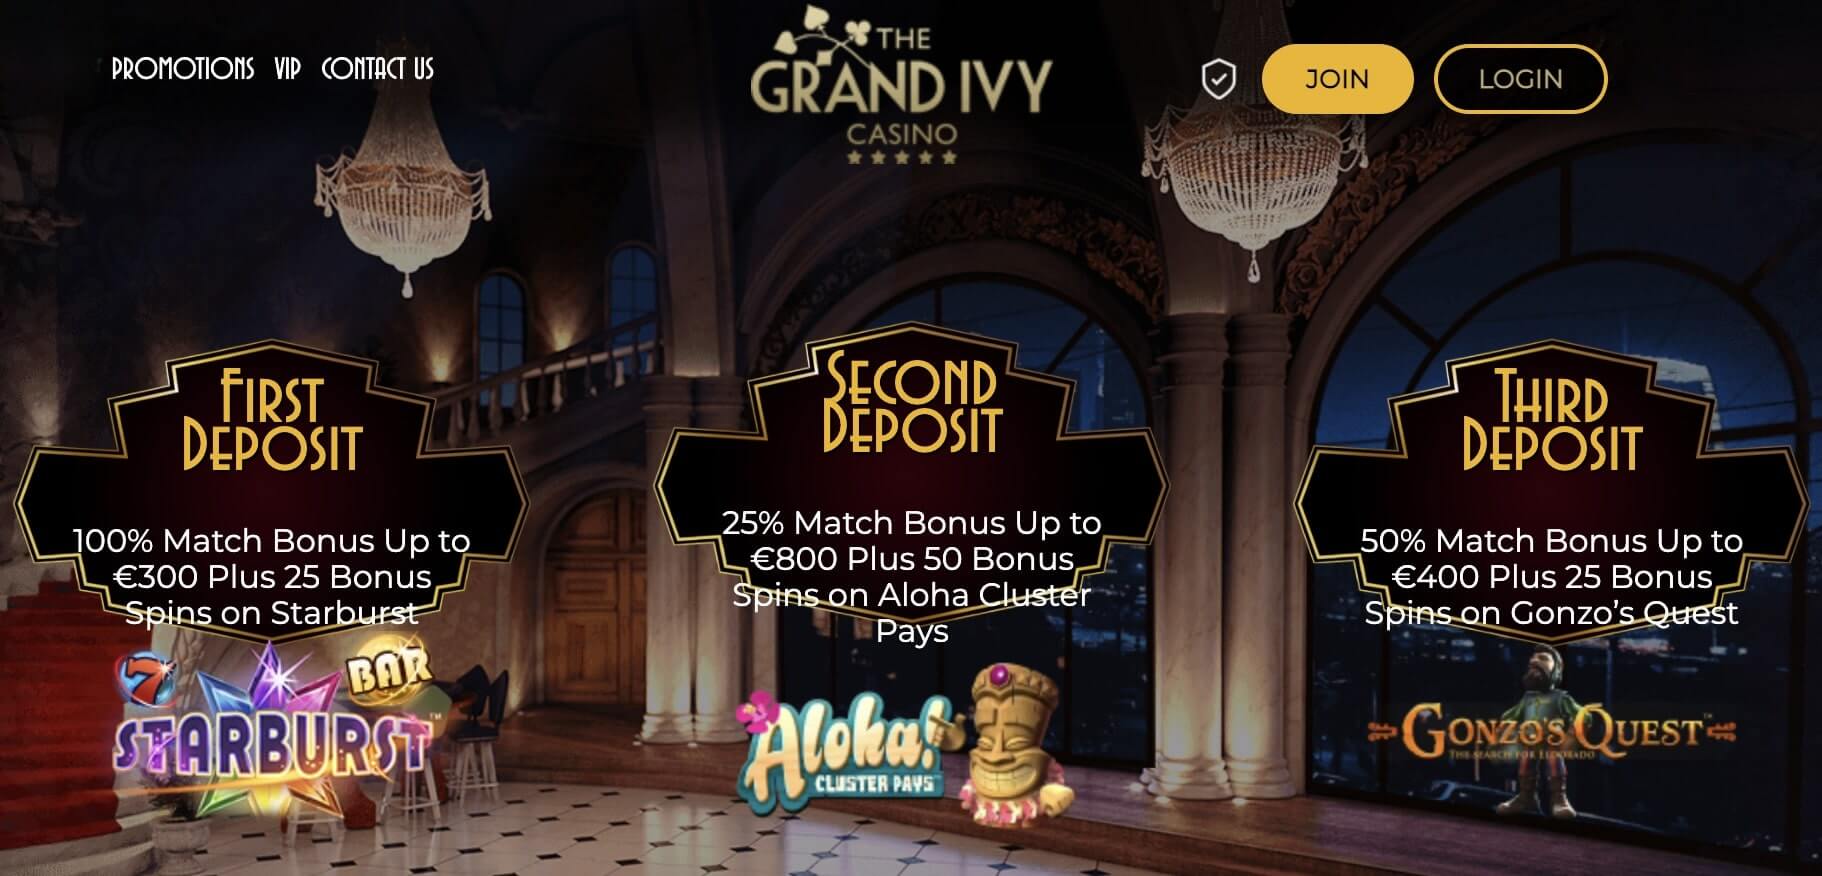 grand ivy casino bonus